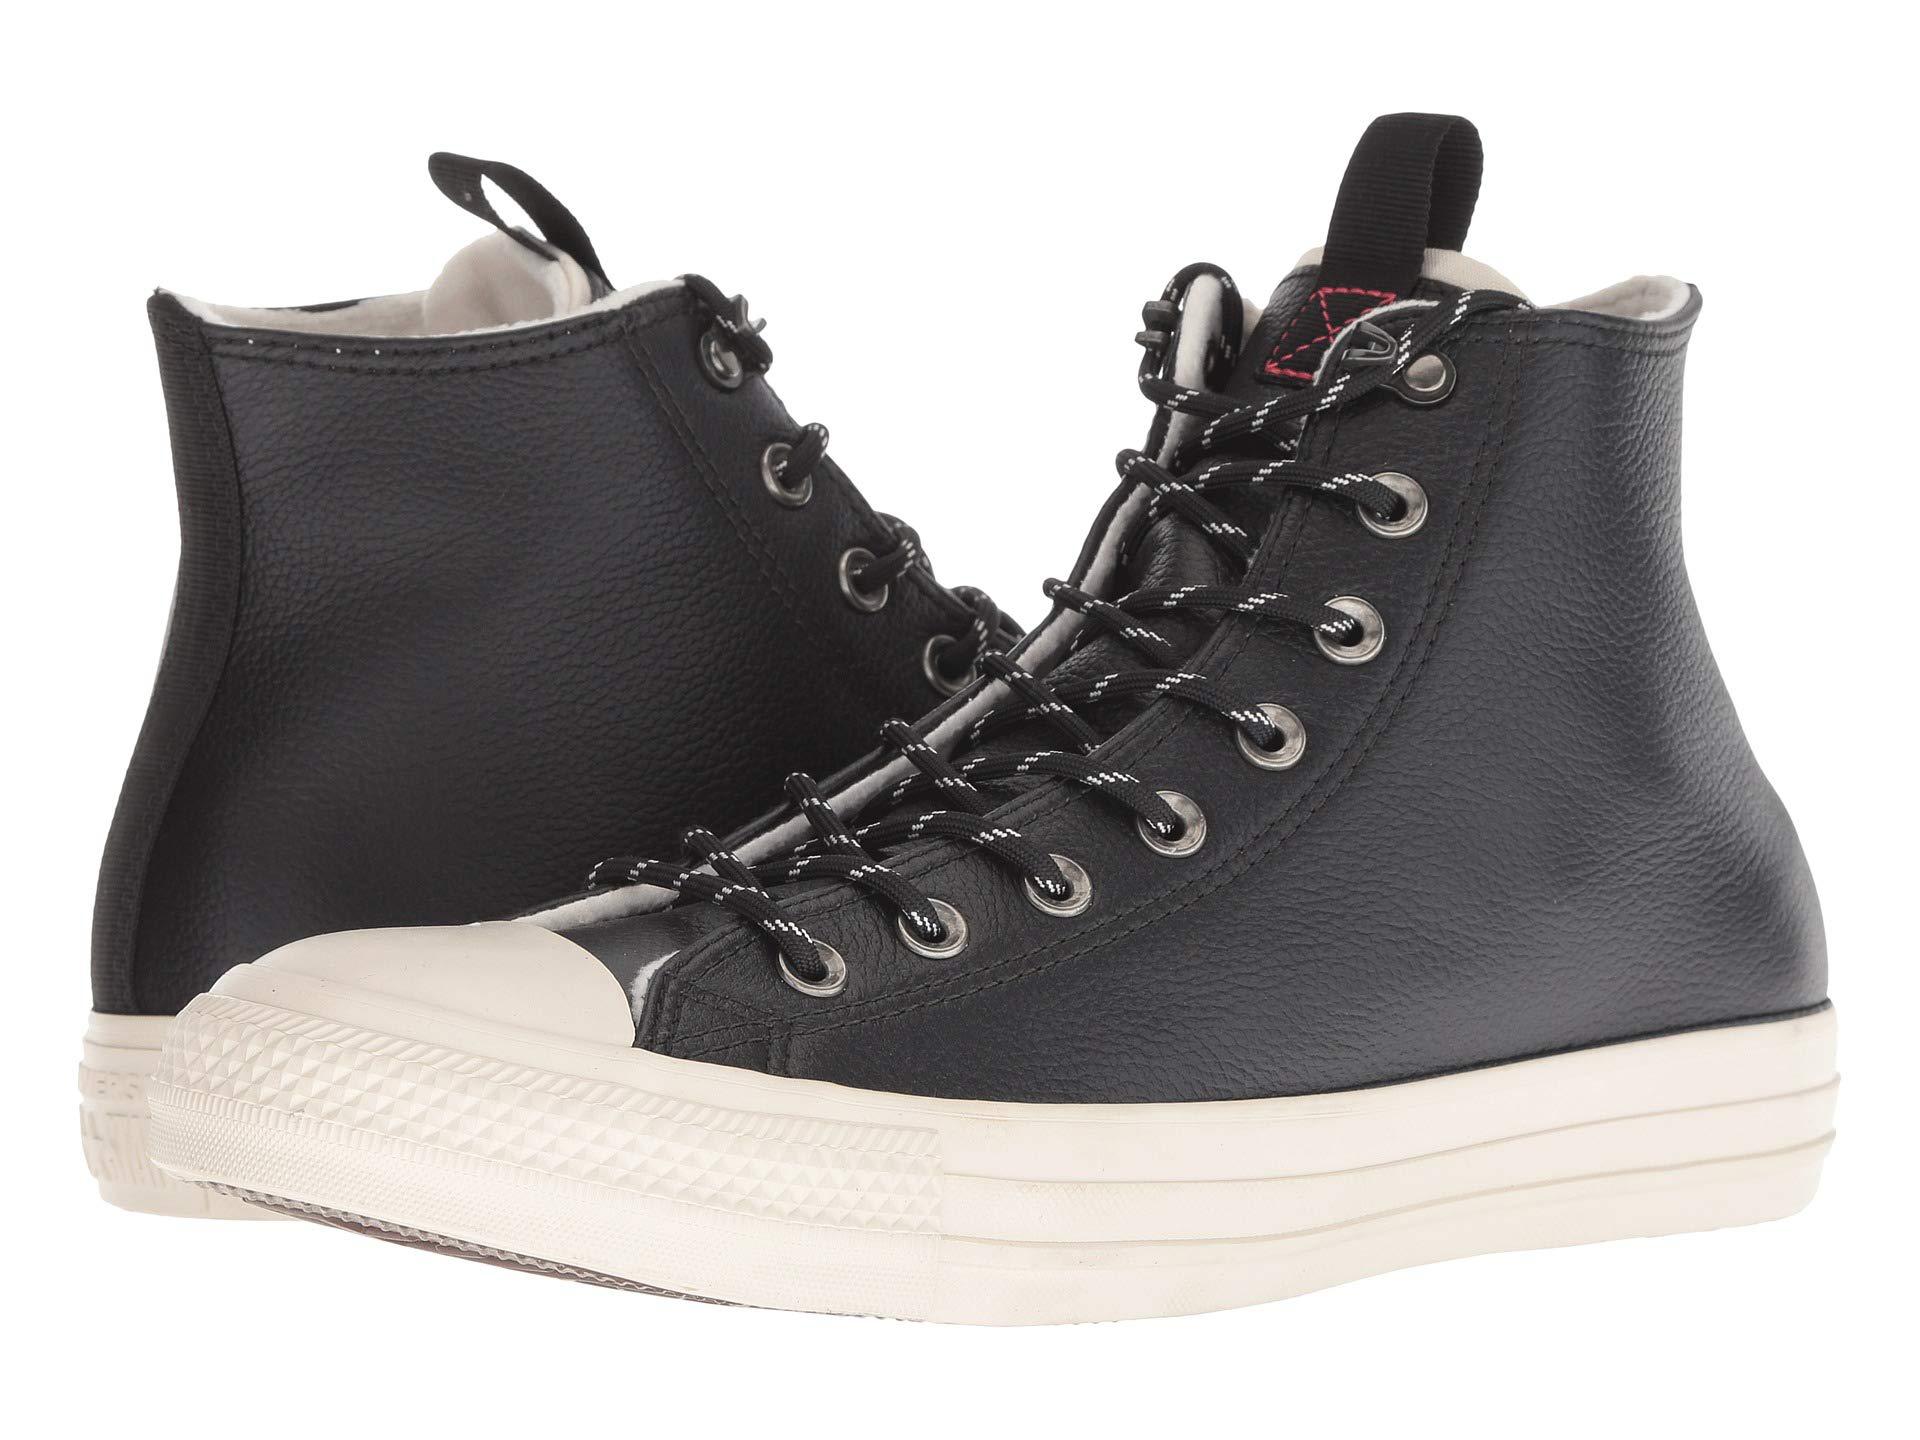 Converse Leather Unisex Chuck Taylor As Hi Black Mono Basketball Shoes